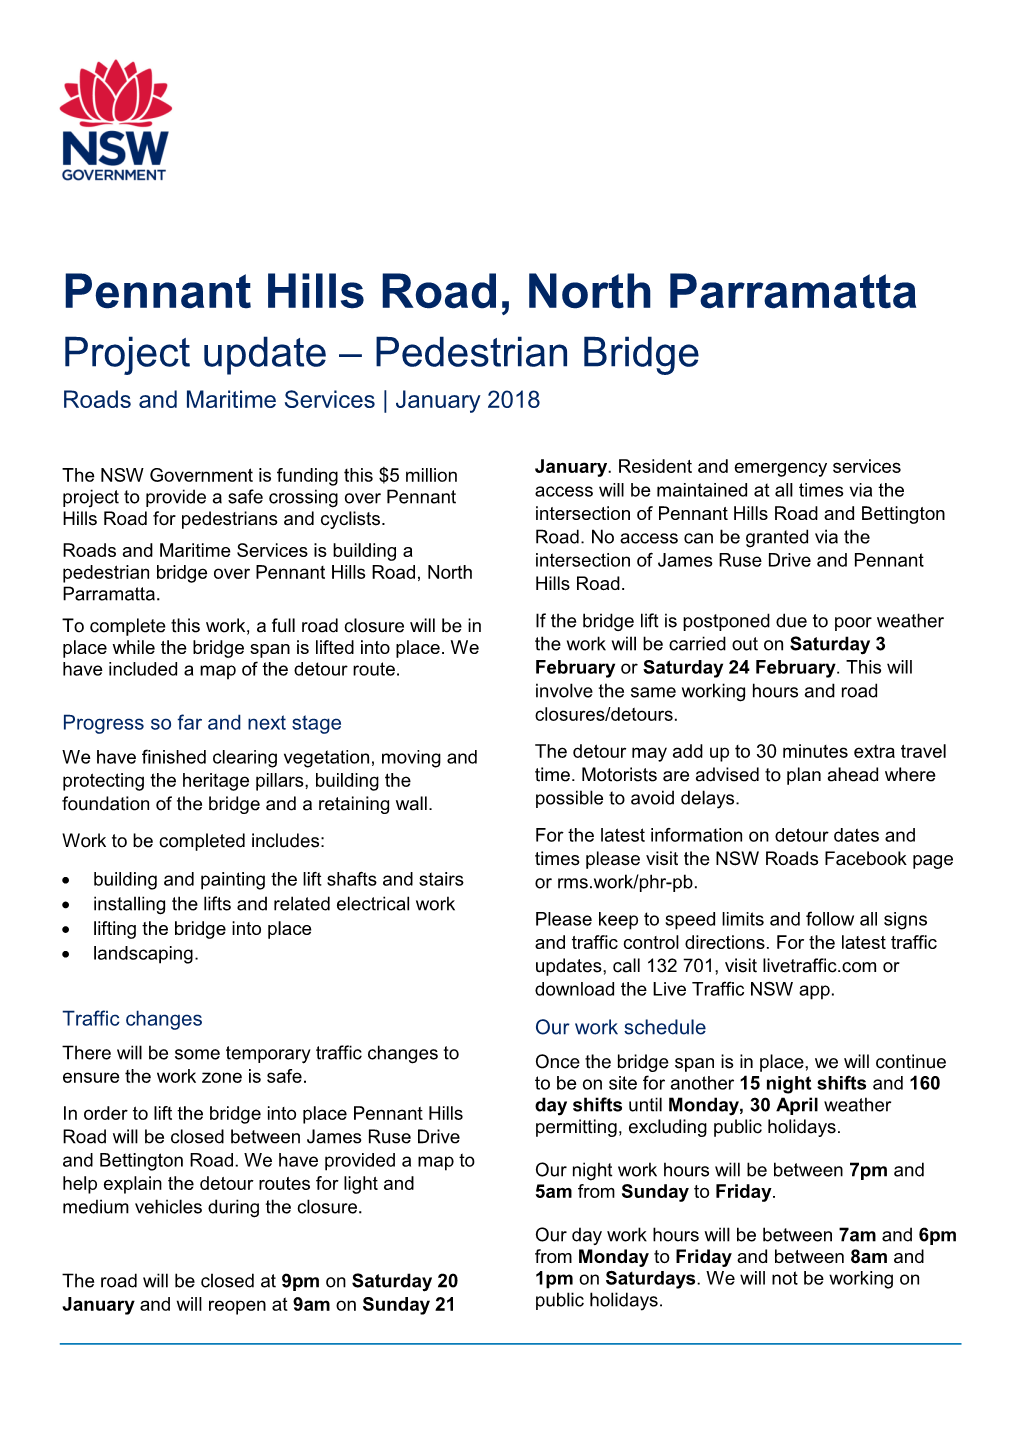 Pennant Hills Road, North Parramatta Project Update – Pedestrian Bridge Roads and Maritime Services | January 2018